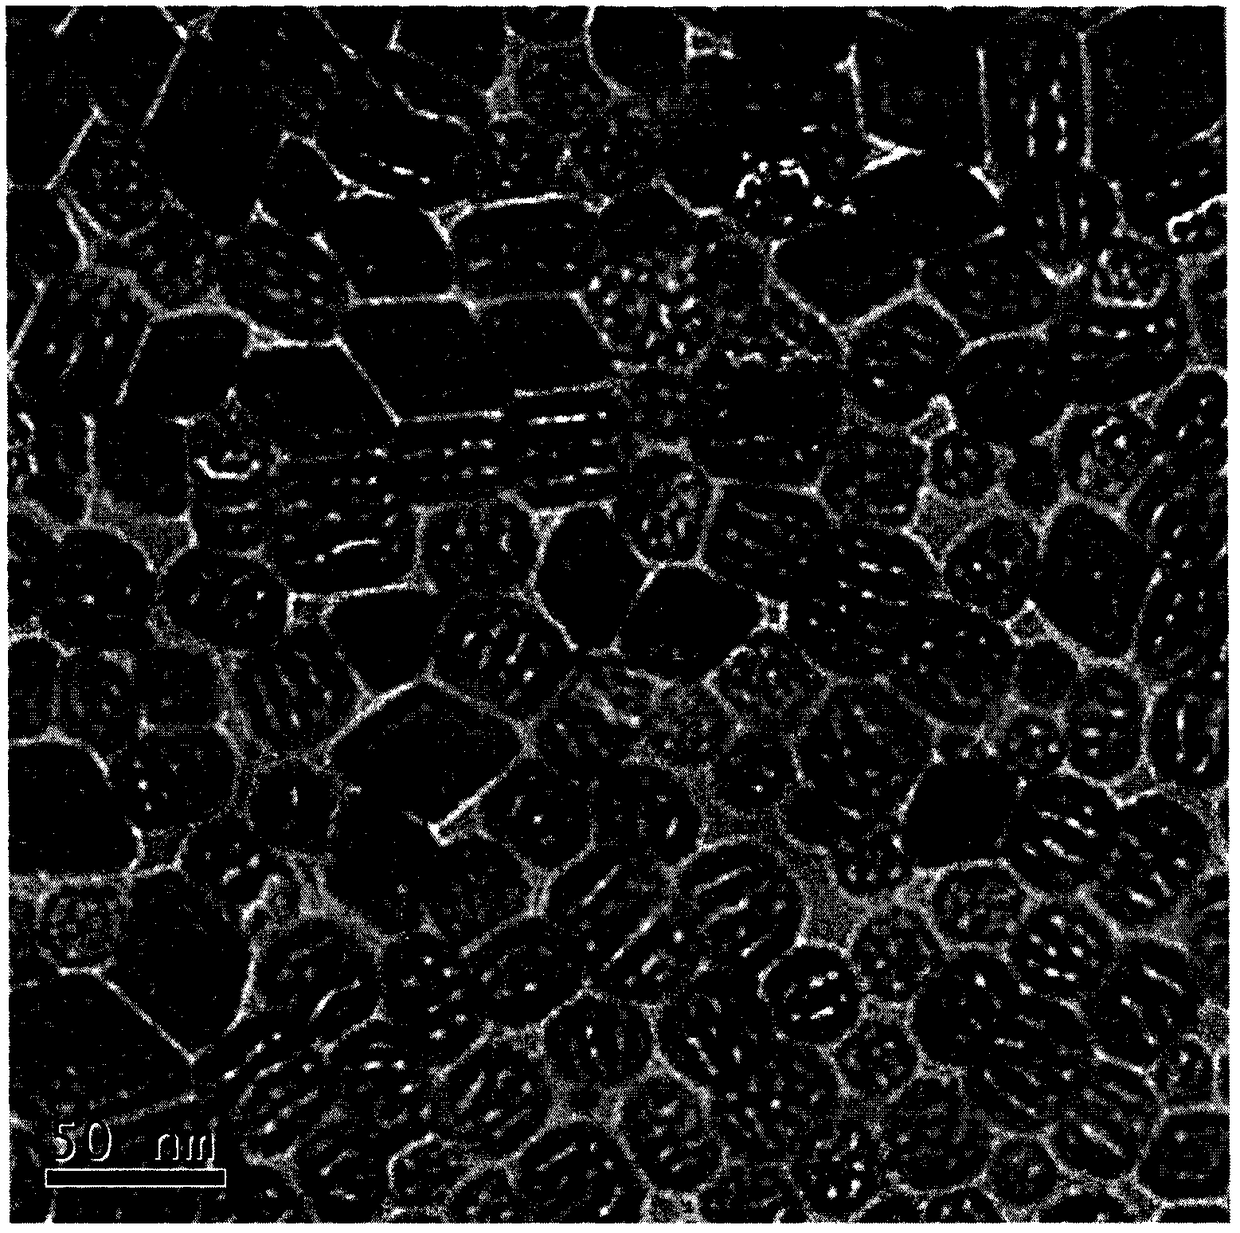 Porous rare earth doped Li4ZrF8 up-conversion nano crystal and preparation method thereof